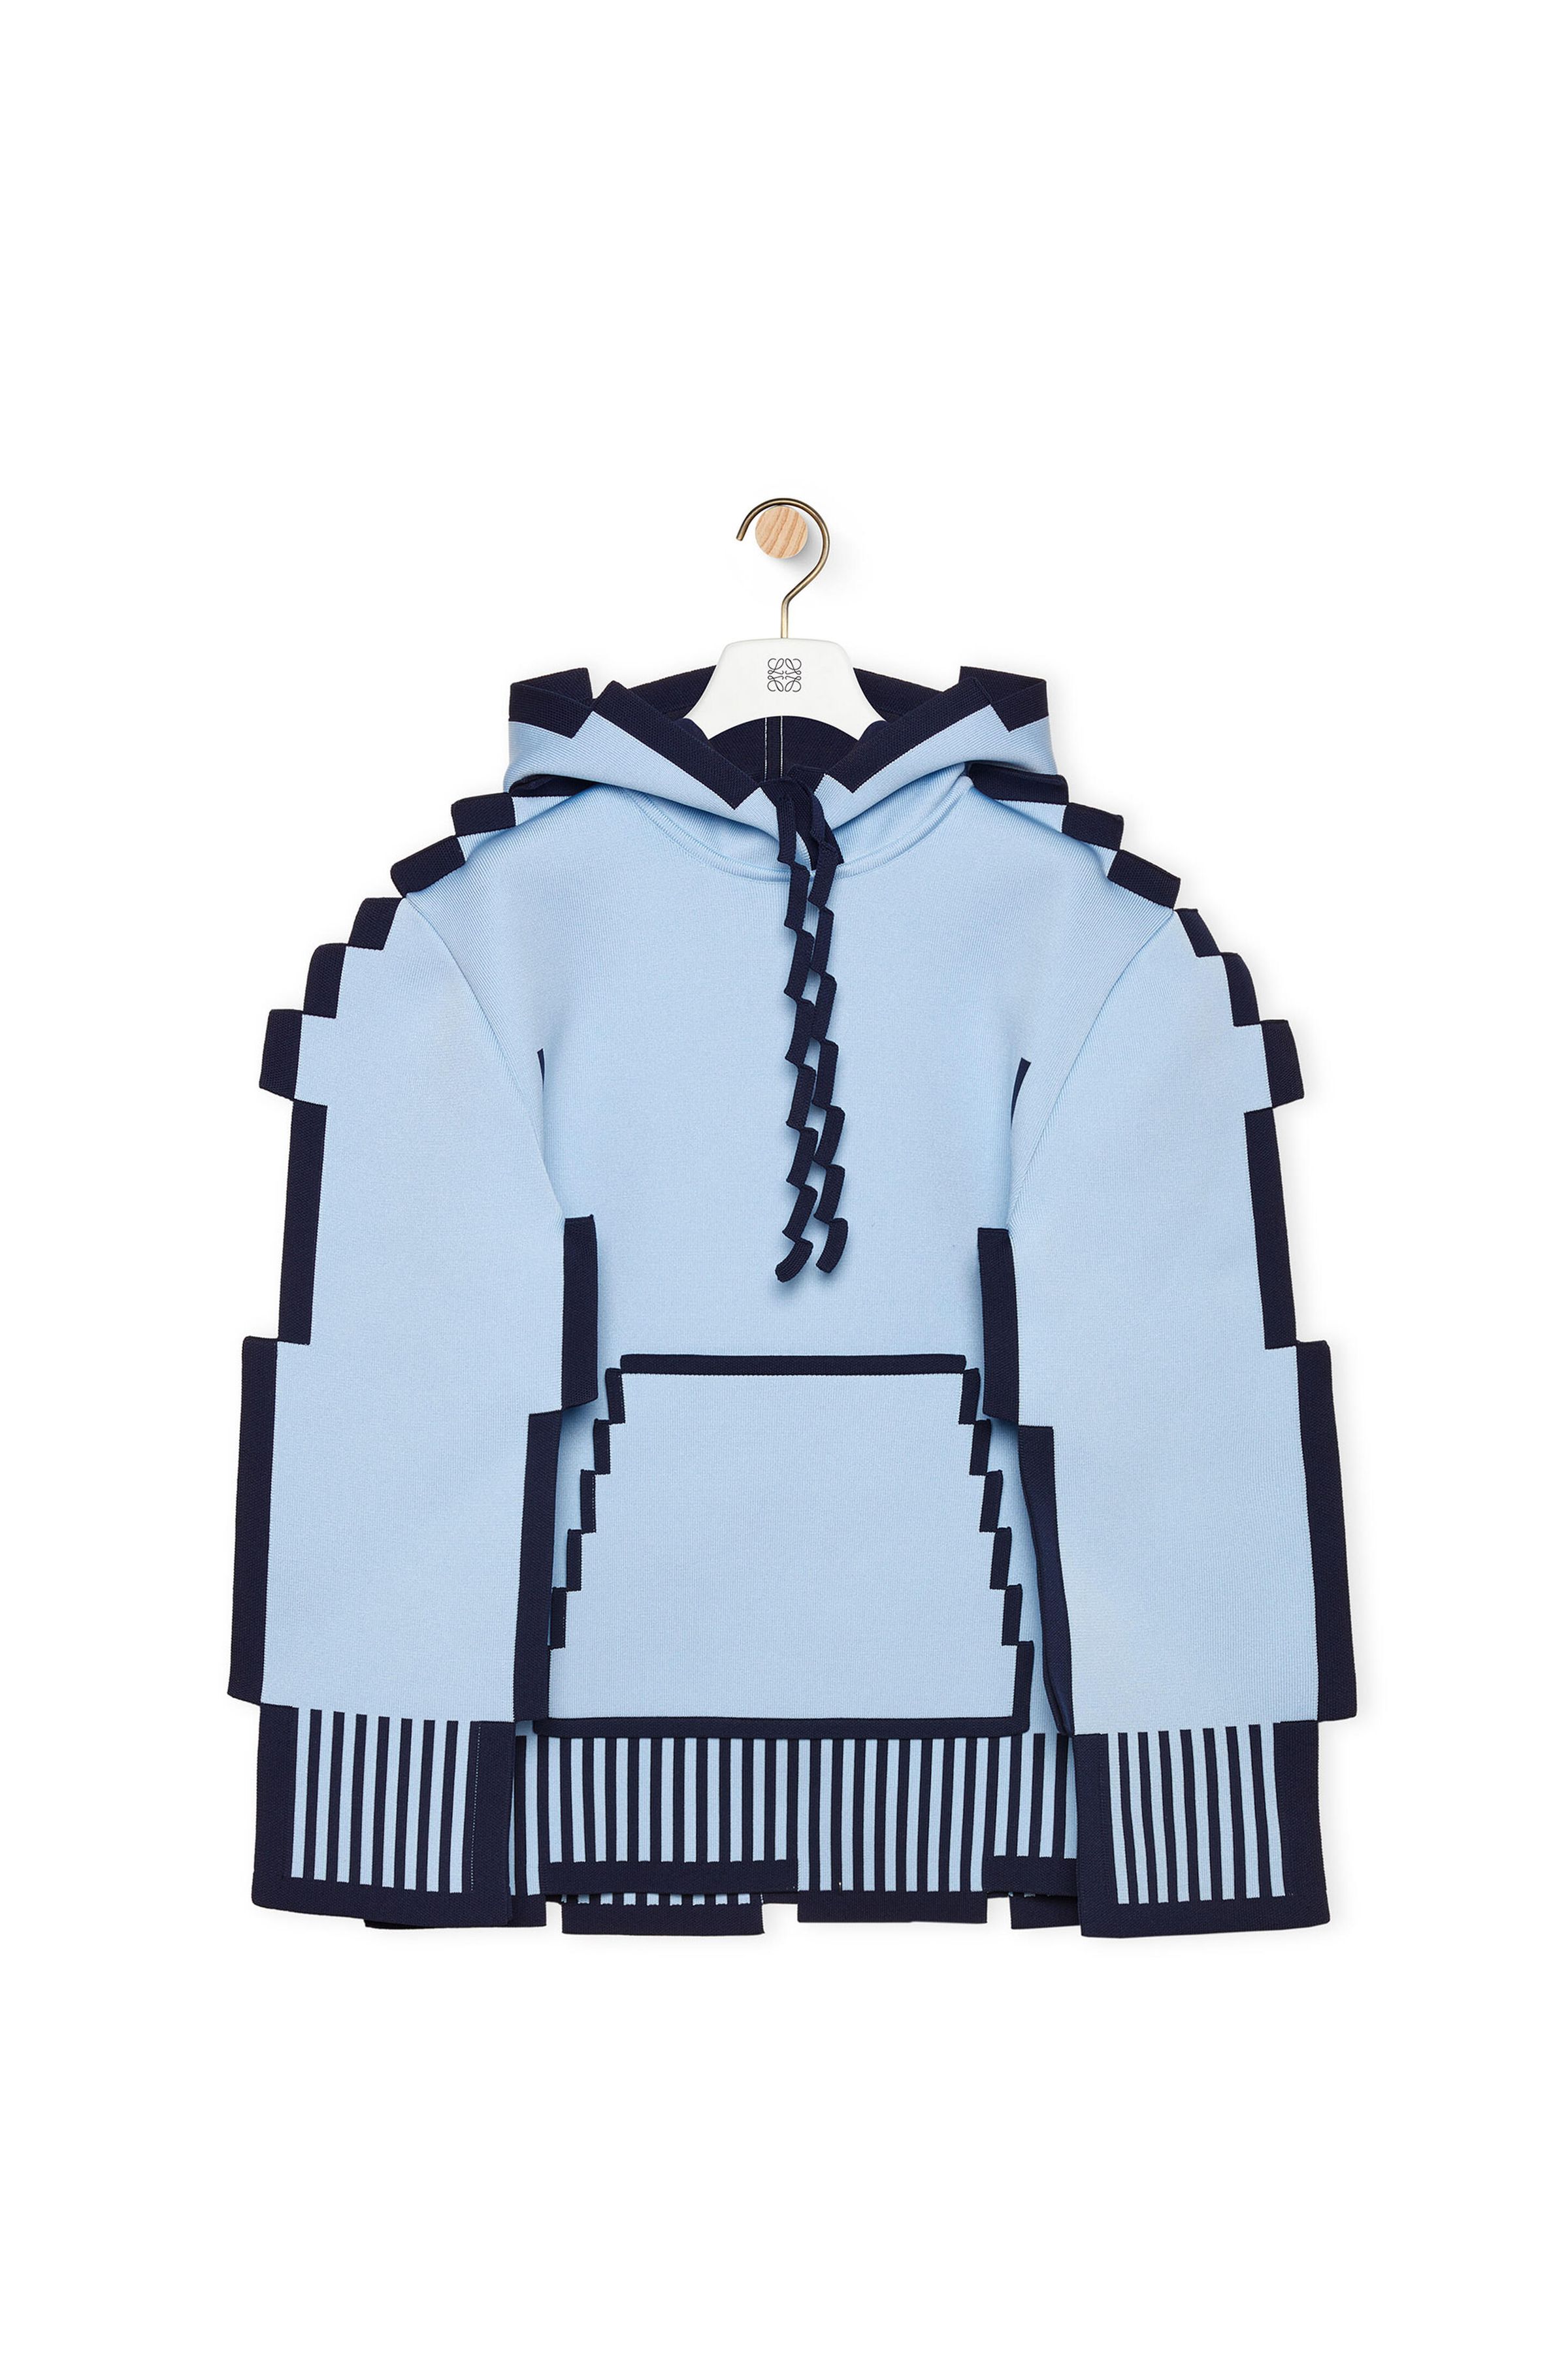 Loewe’s pixelated hoodie product image